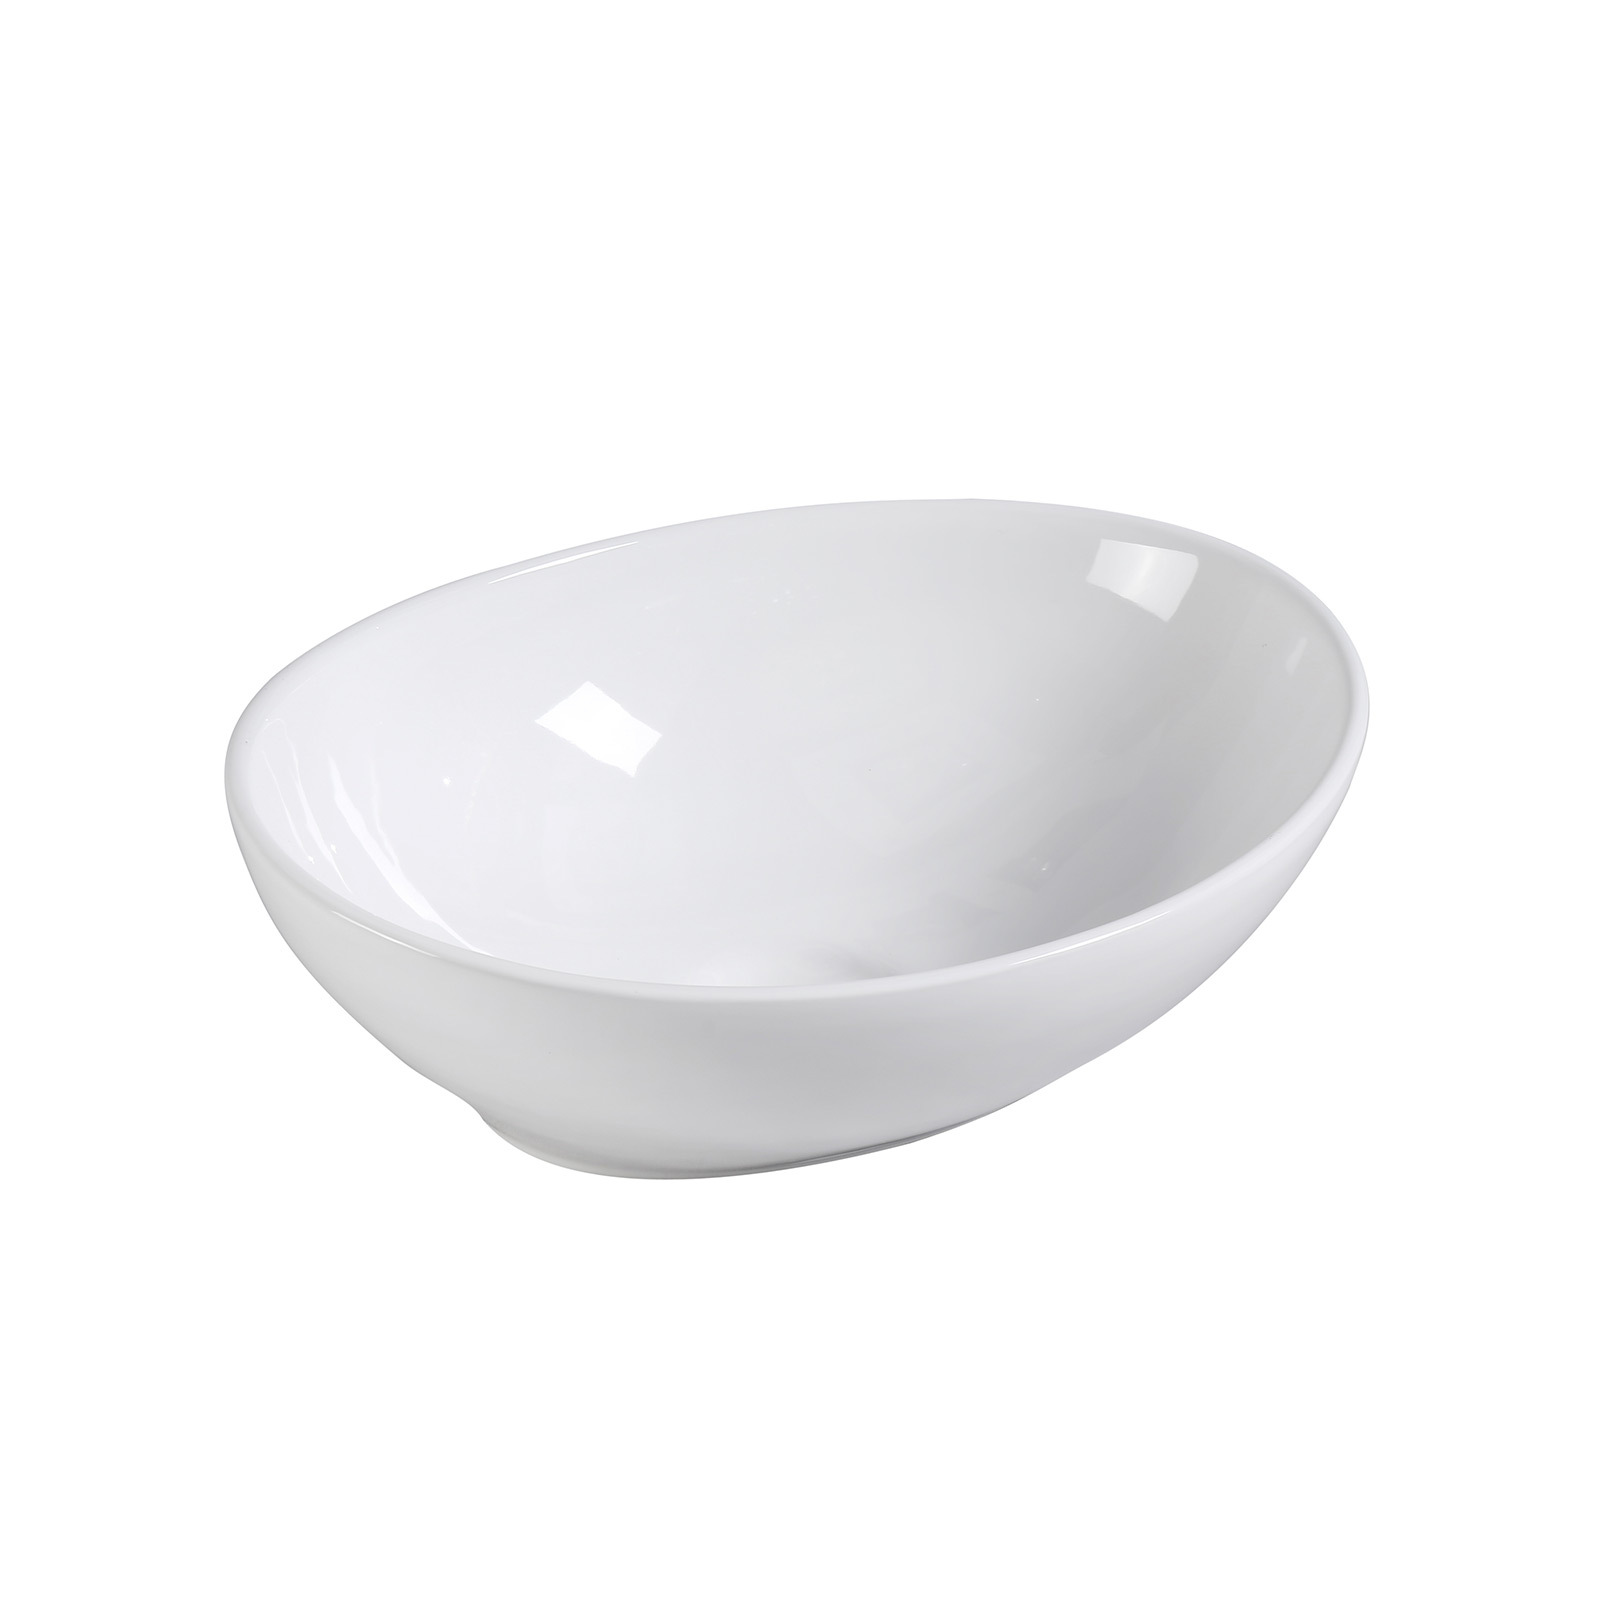 41 x 34X 14.5cm Ceramic Bathroom Basin Oval - WHITE